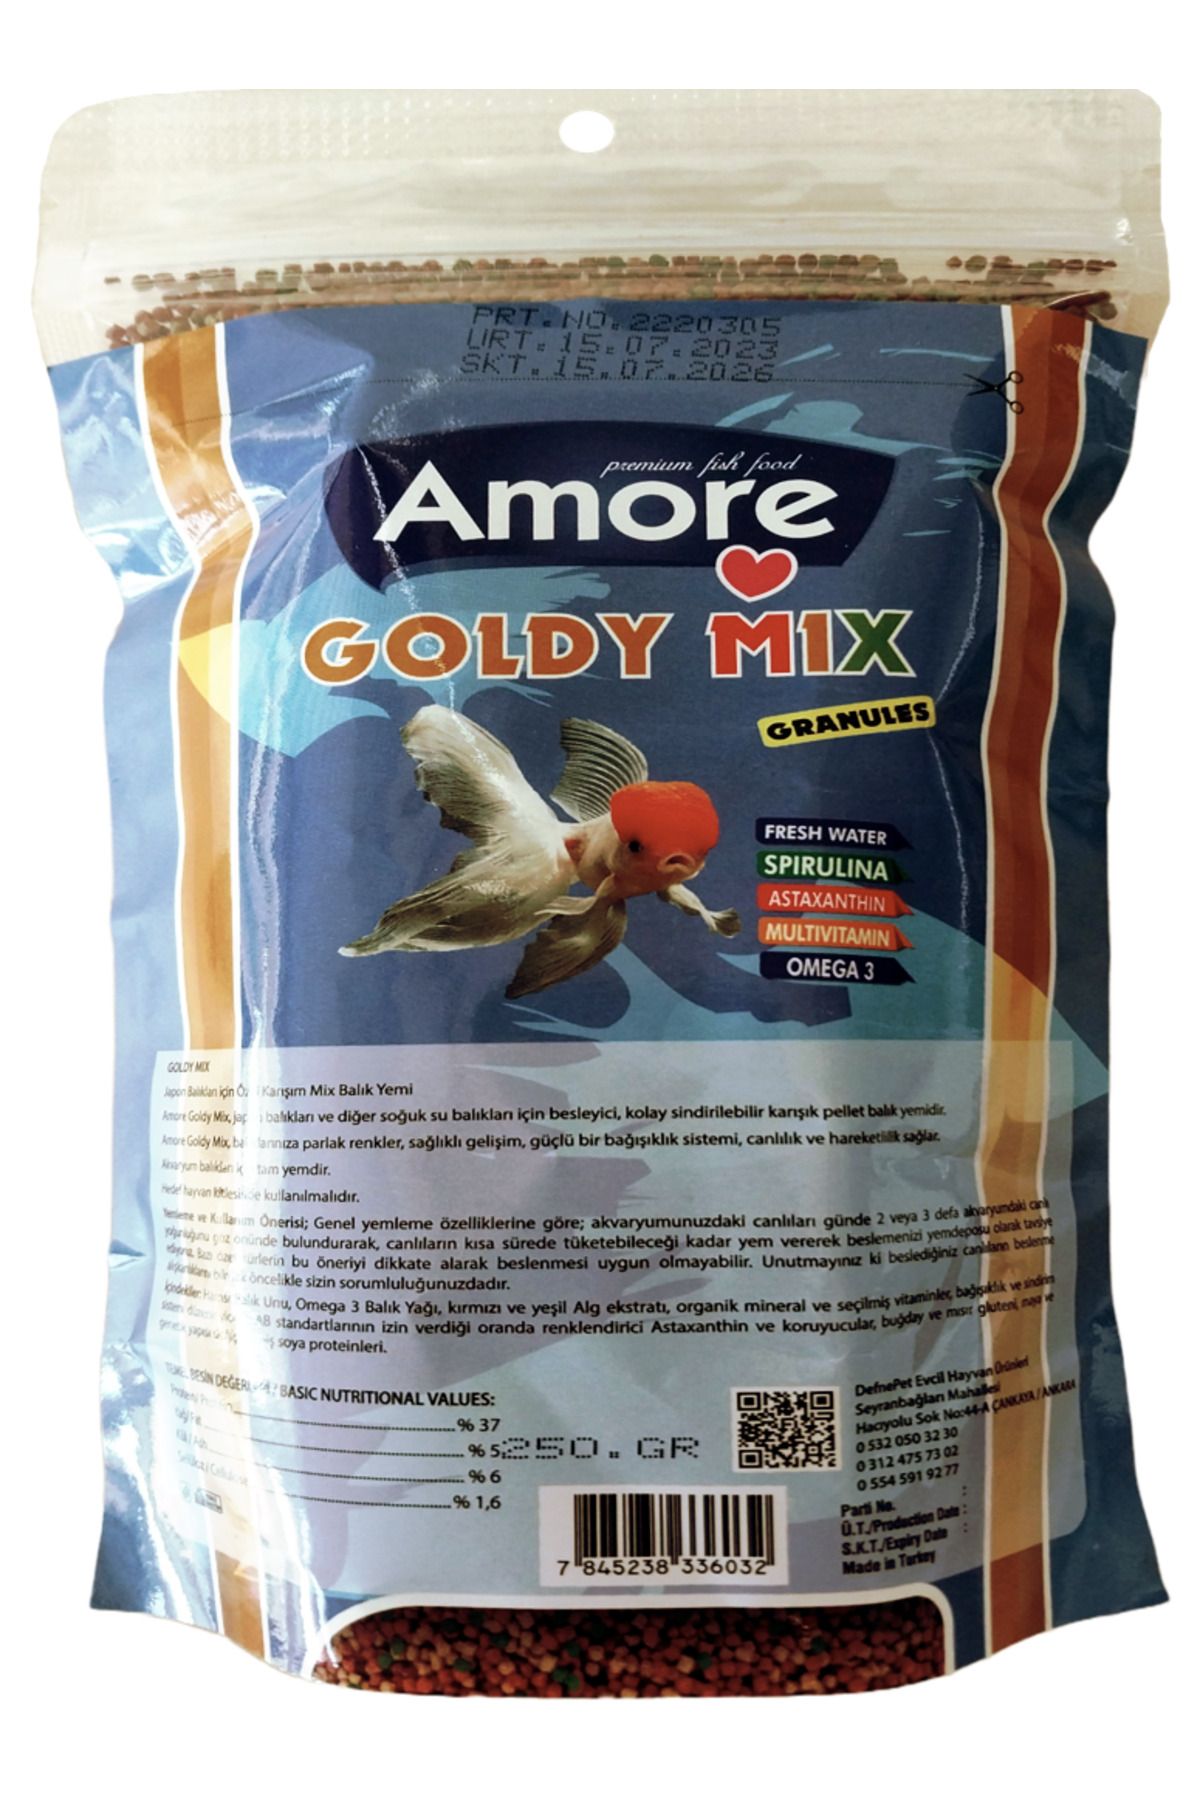 Amore Goldy Mix %37 Protein 250 gr Kajero Japon ve 1 kg Art Aqua Naturel Pond Balik Yemi